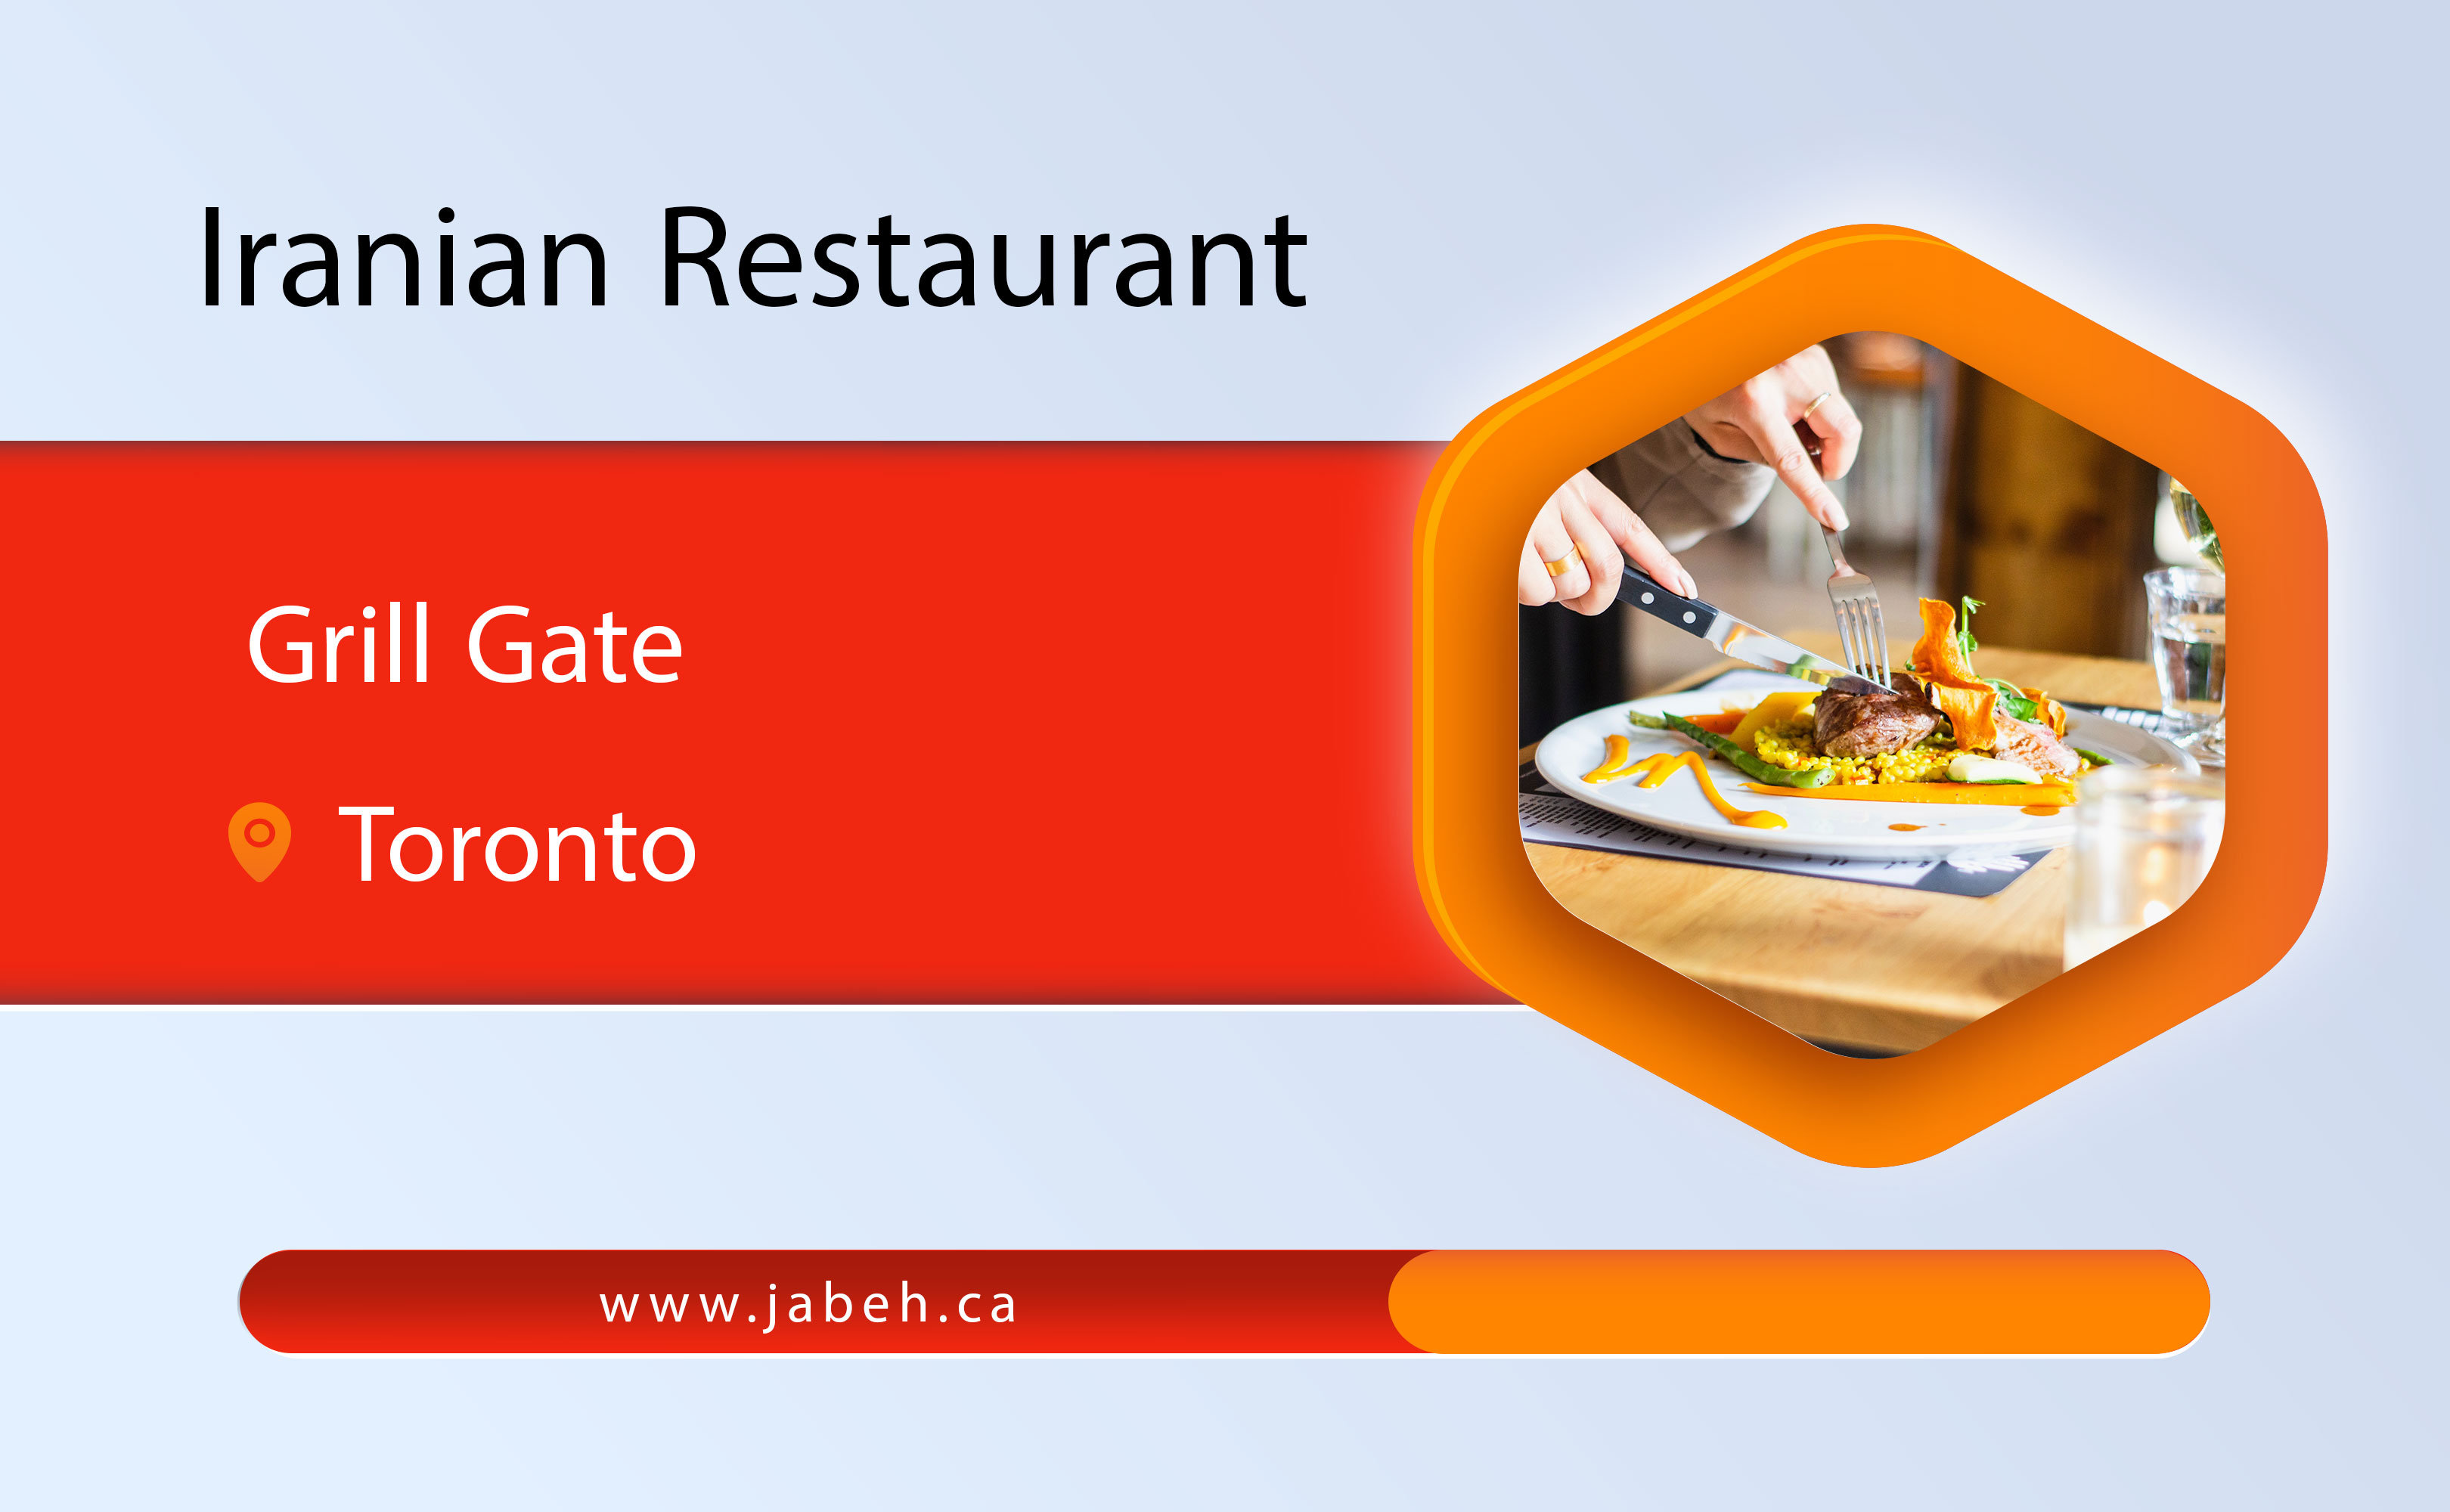 Grill Gate Iranian Restaurant in Toronto